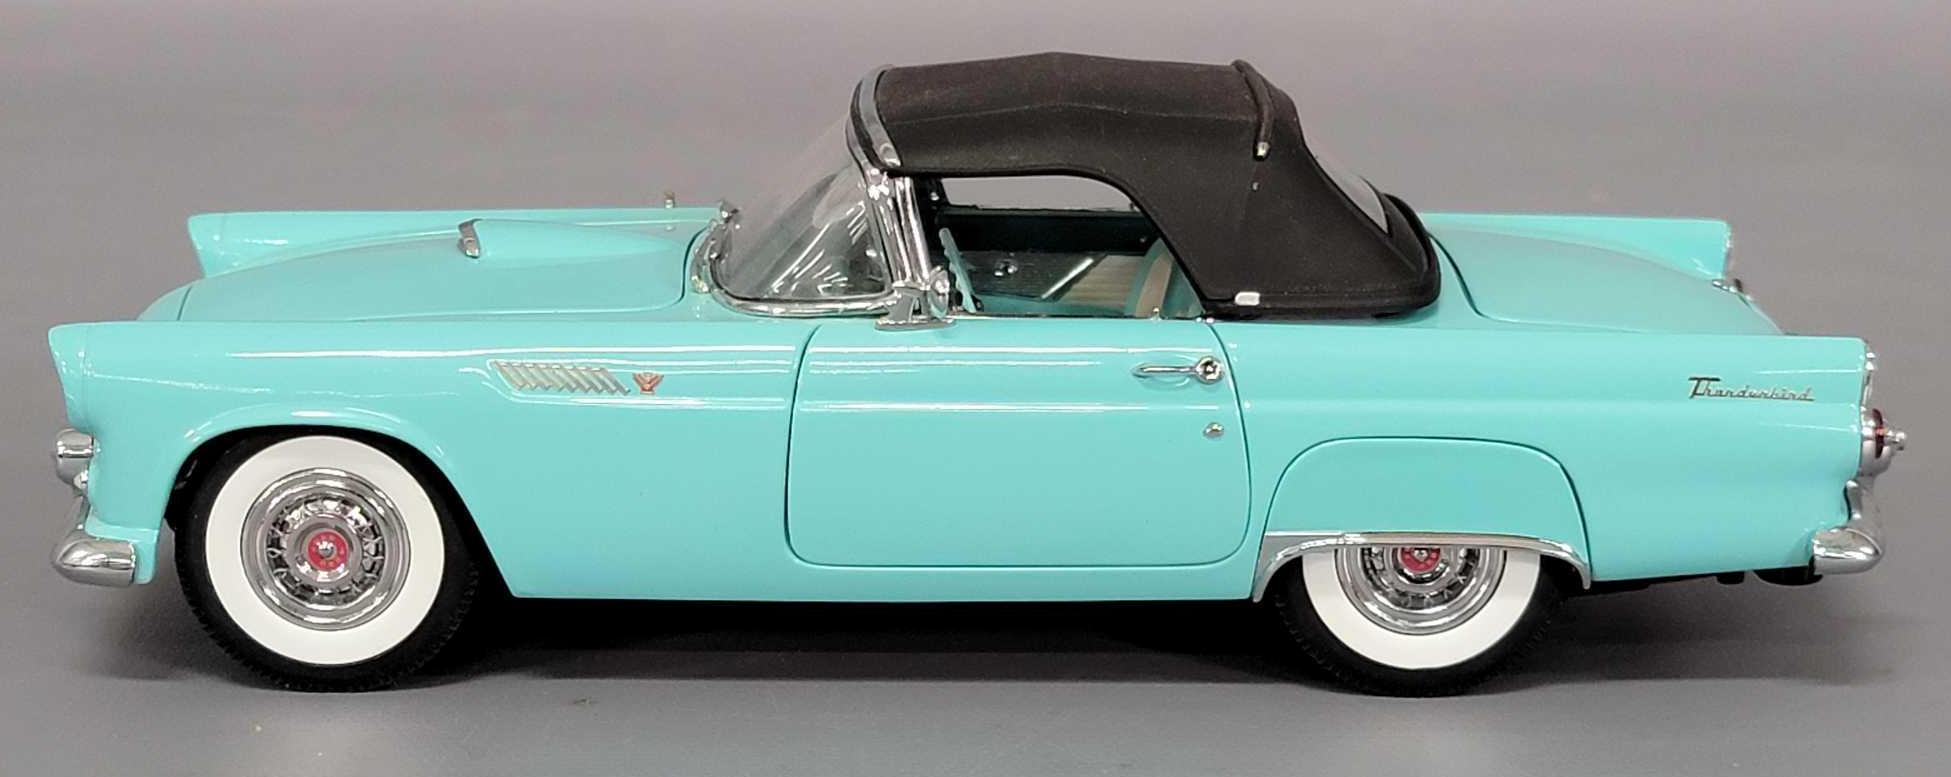 Danbury Mint 1/24 scale Turquoise 1955 Ford Thunderbird ...